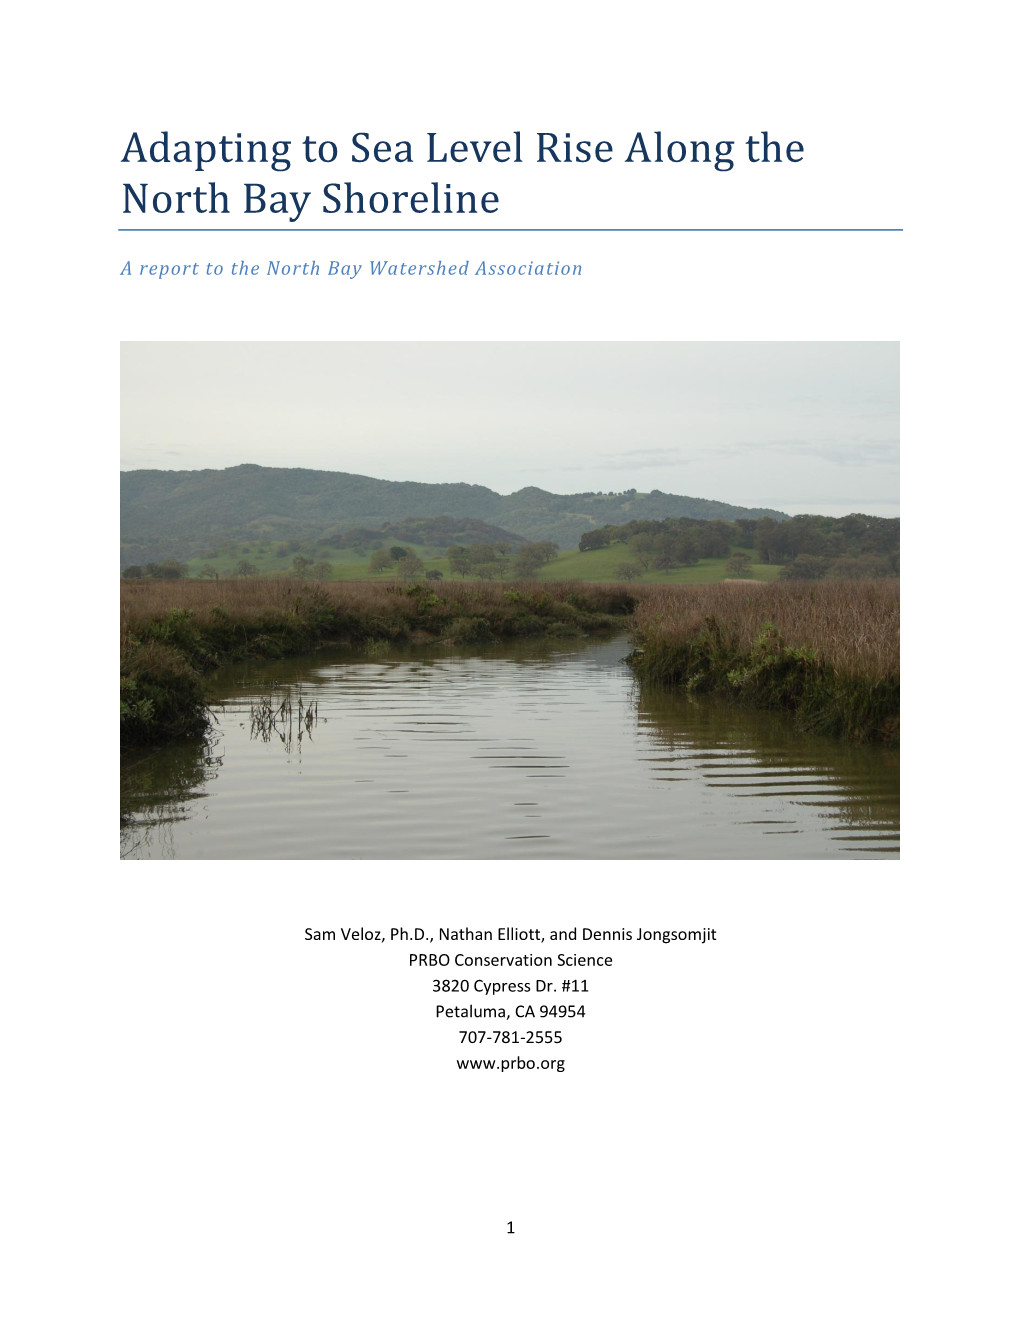 Adapting to Sea Level Rise Along the North Bay Shoreline